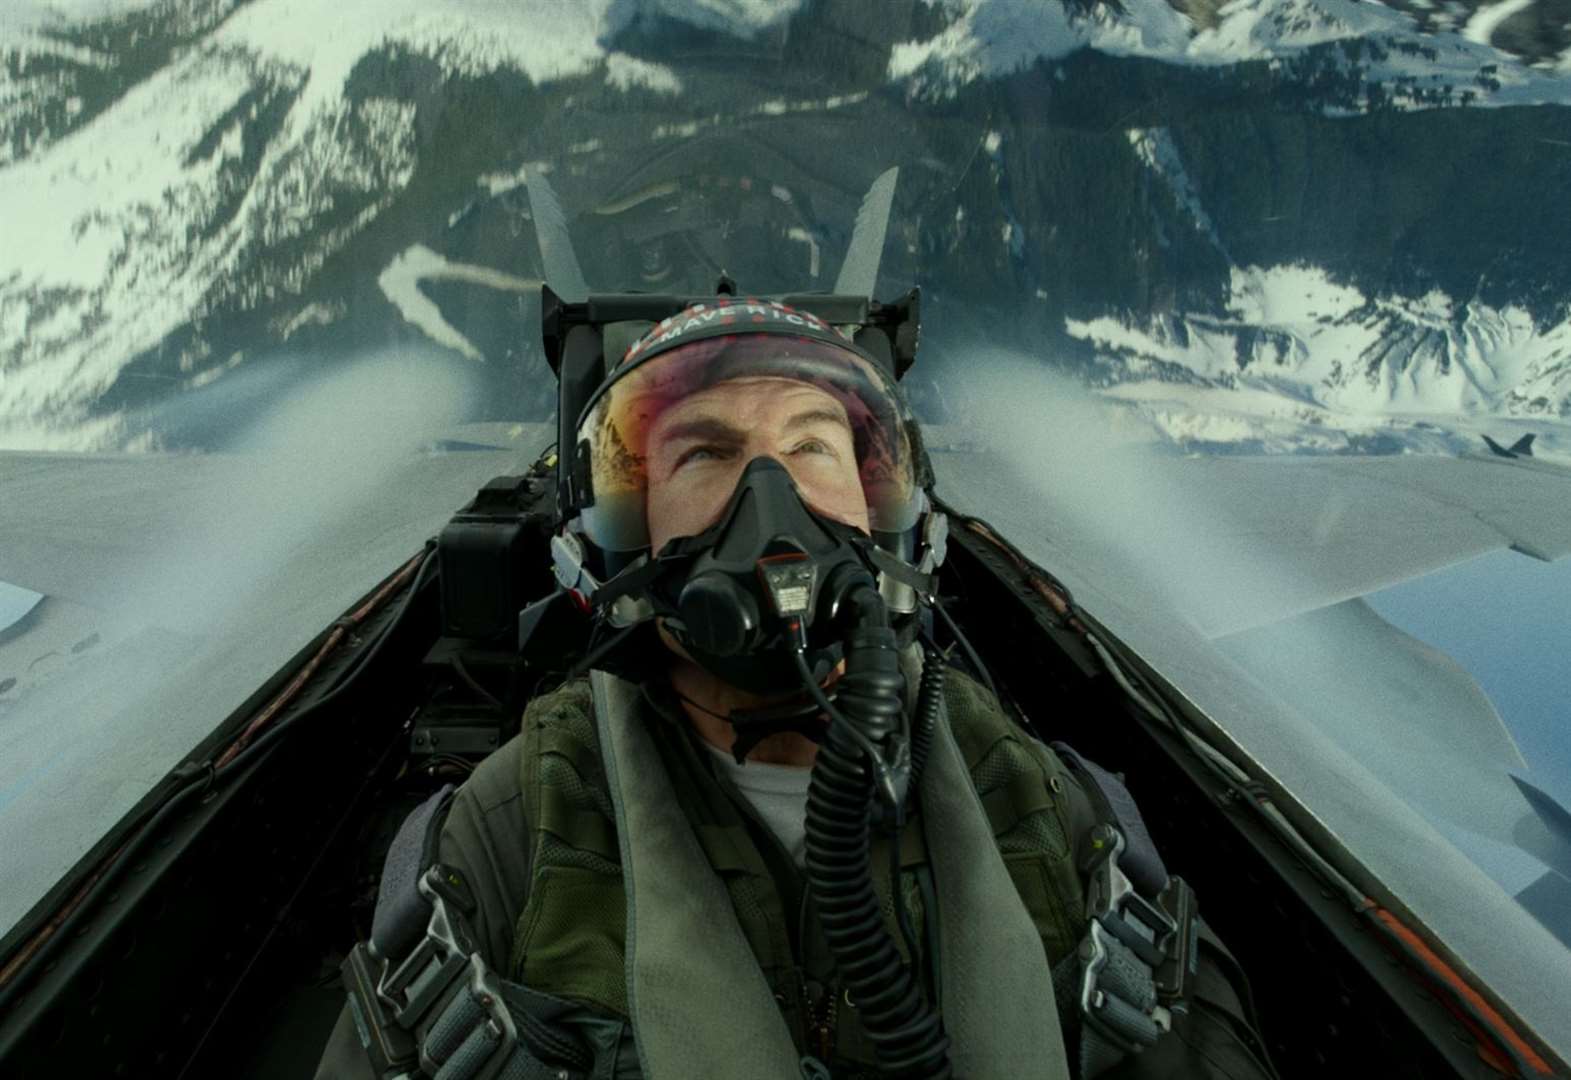 Tom Cruise is flying high in Top Gun: Maverick